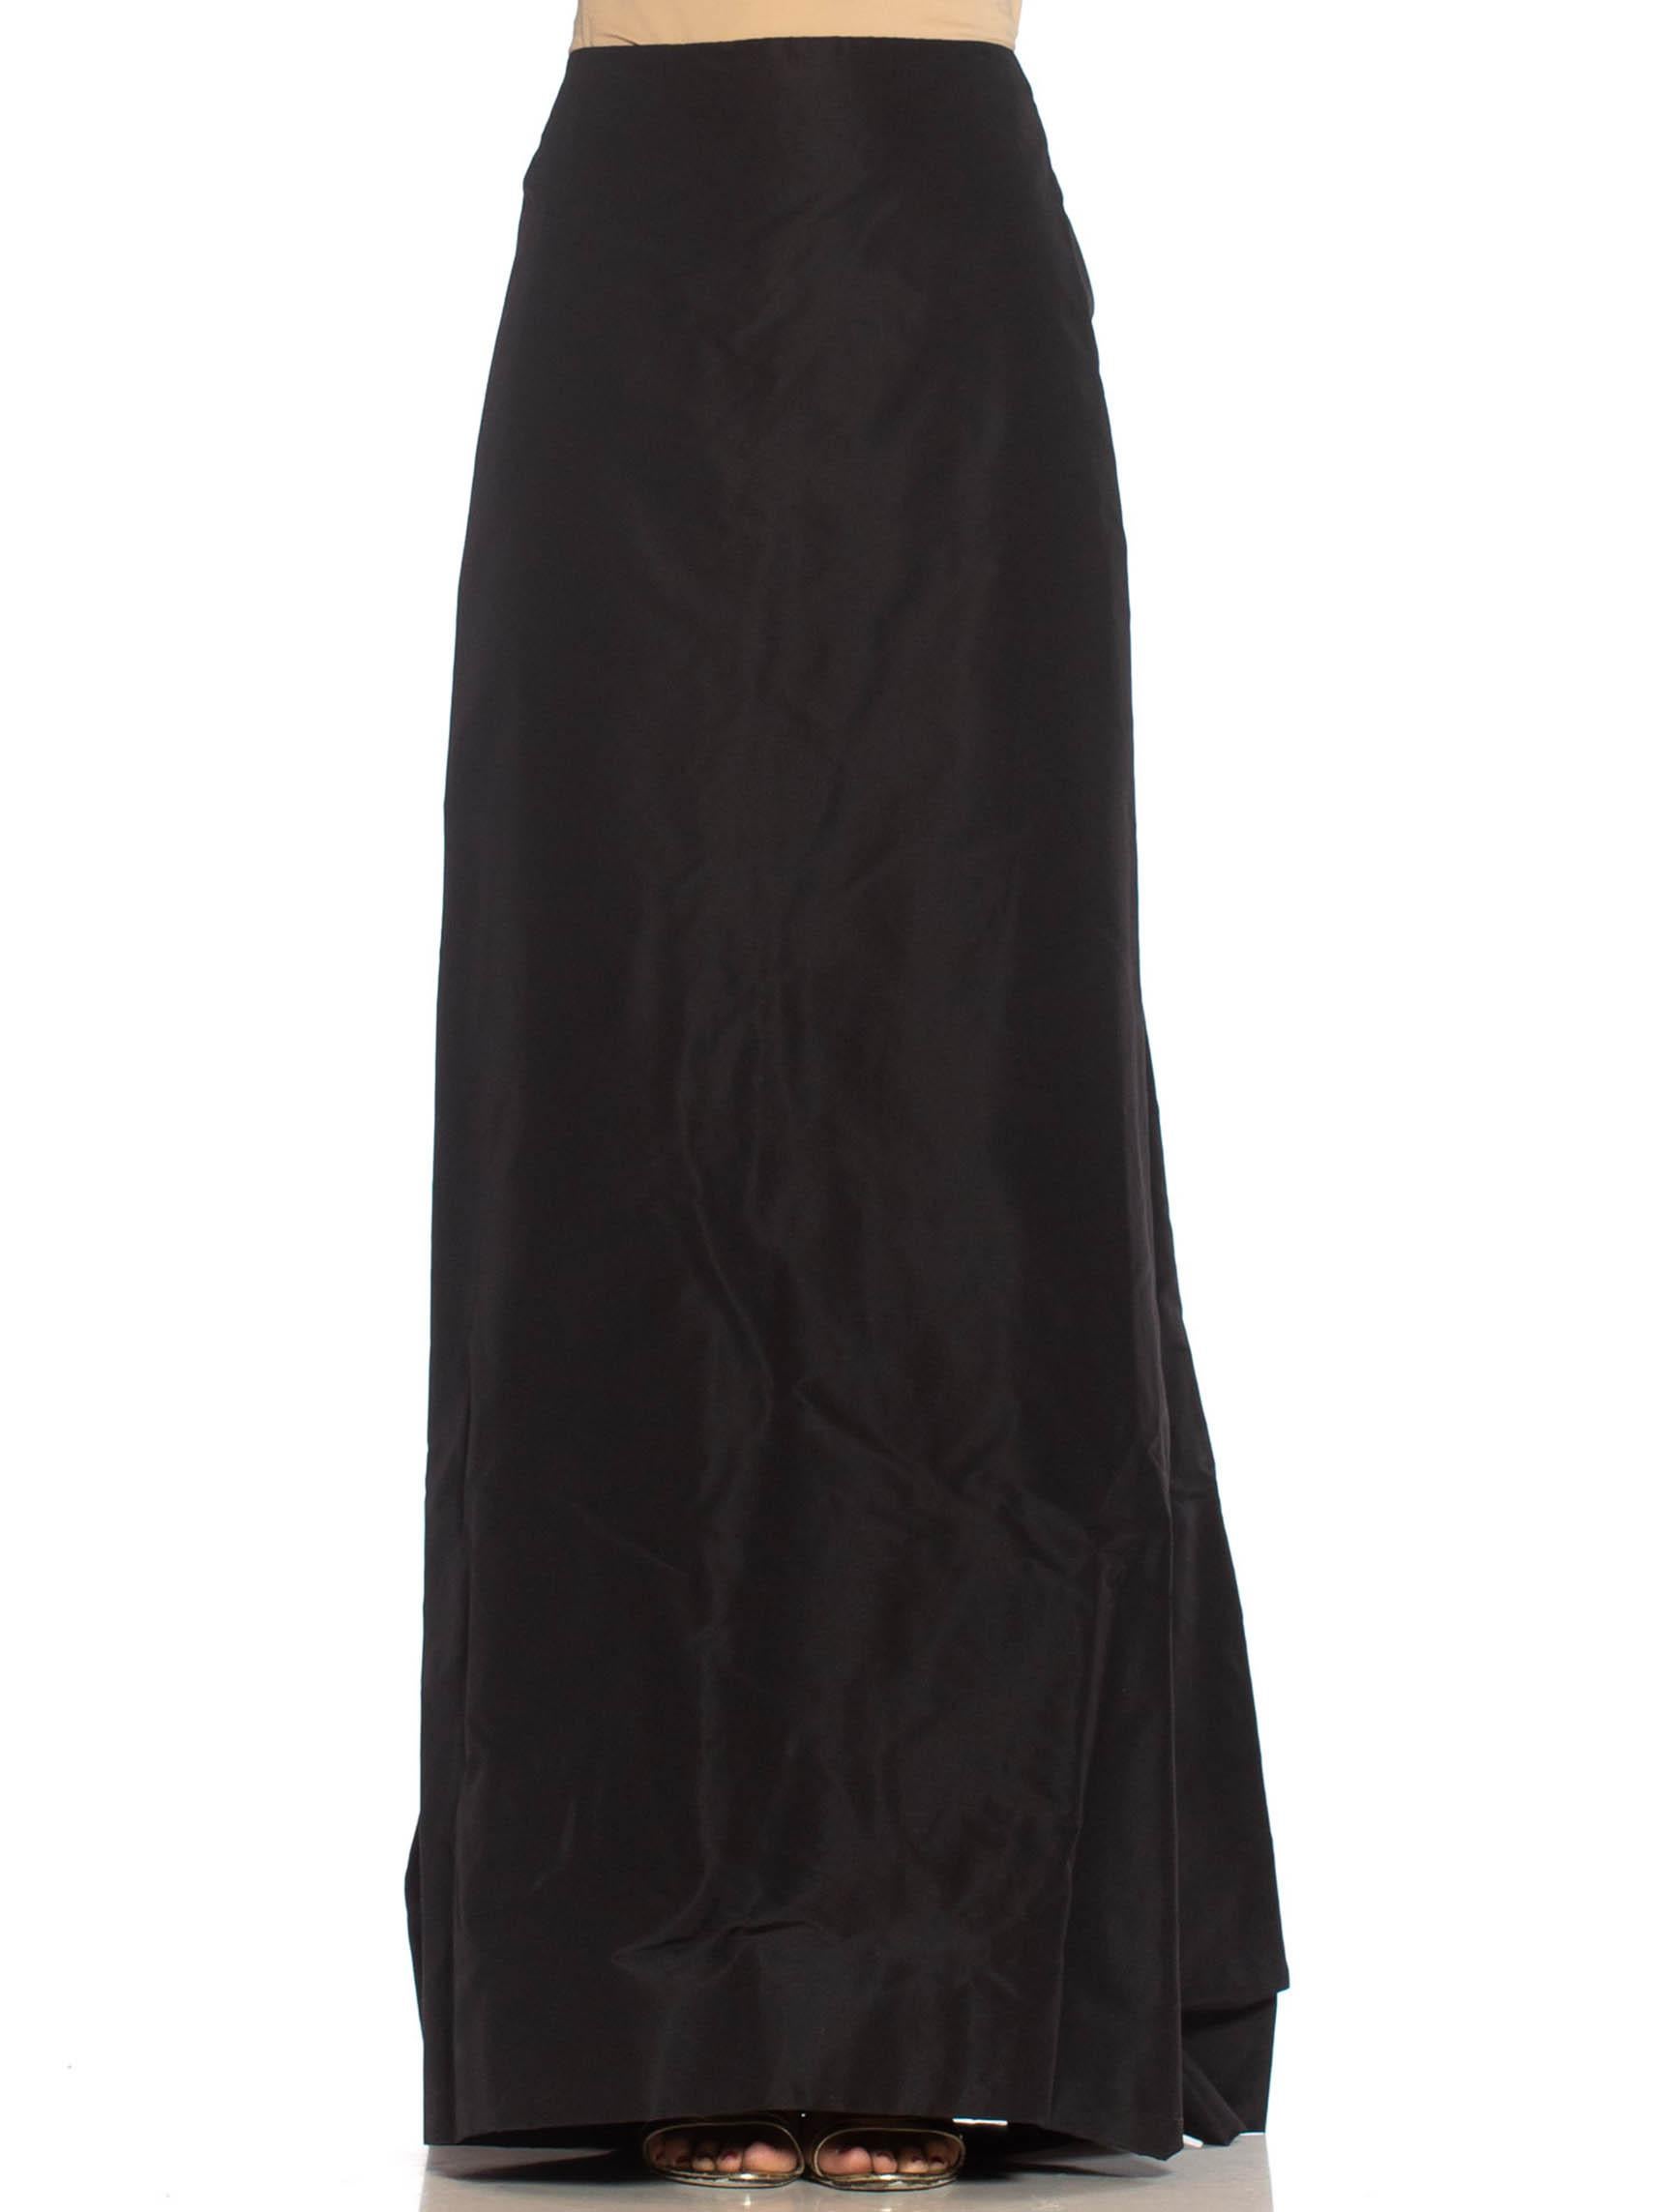 Women's 1990S MICHAEL KORS Black Silk Taffeta Trained Evening Skirt NWT For Sale